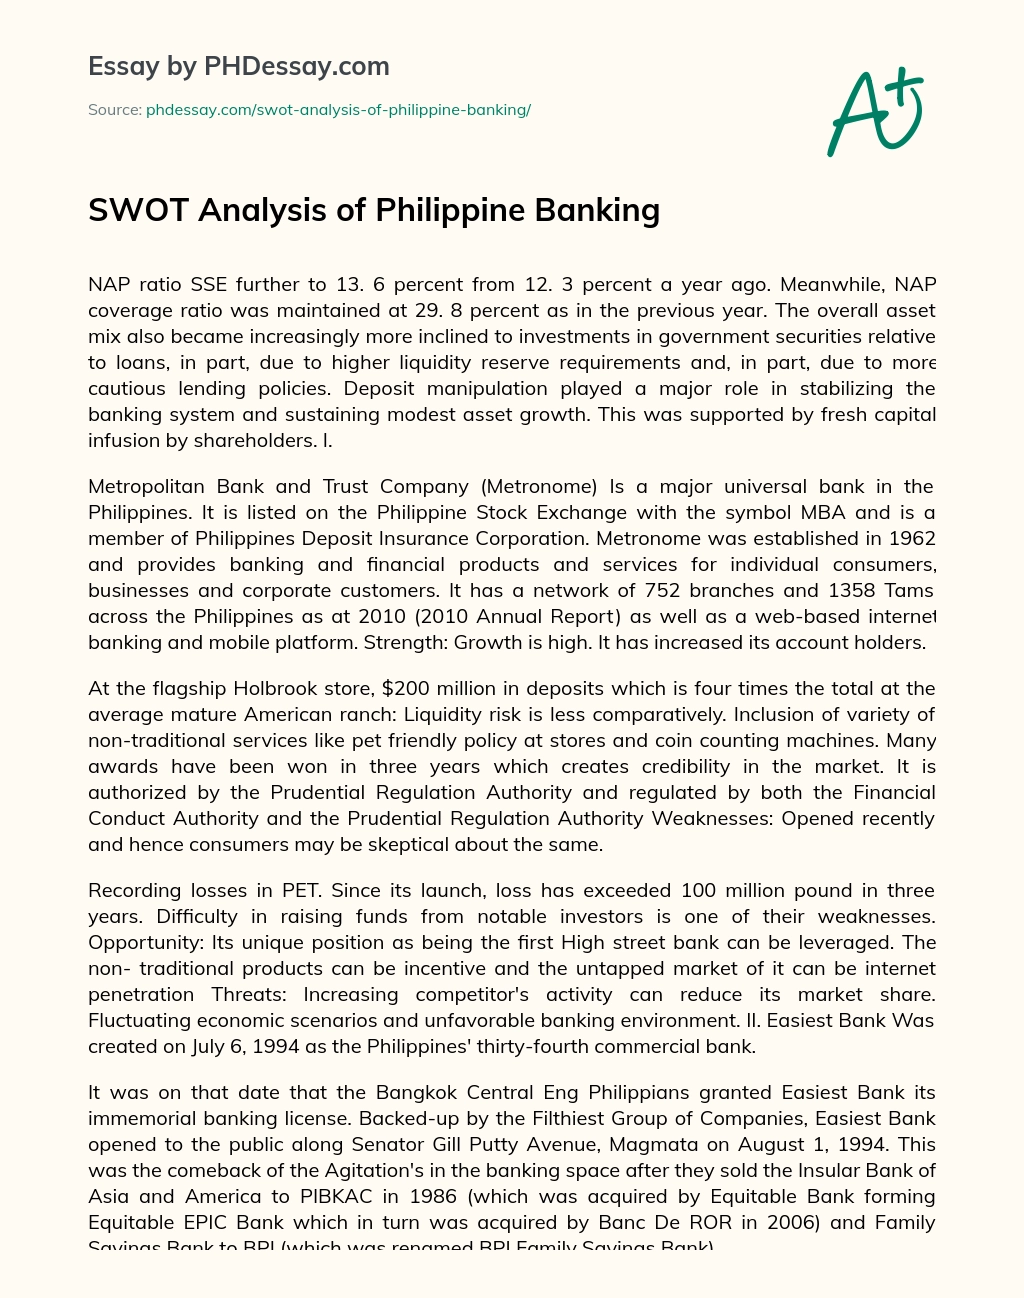 SWOT Analysis of Philippine Banking essay